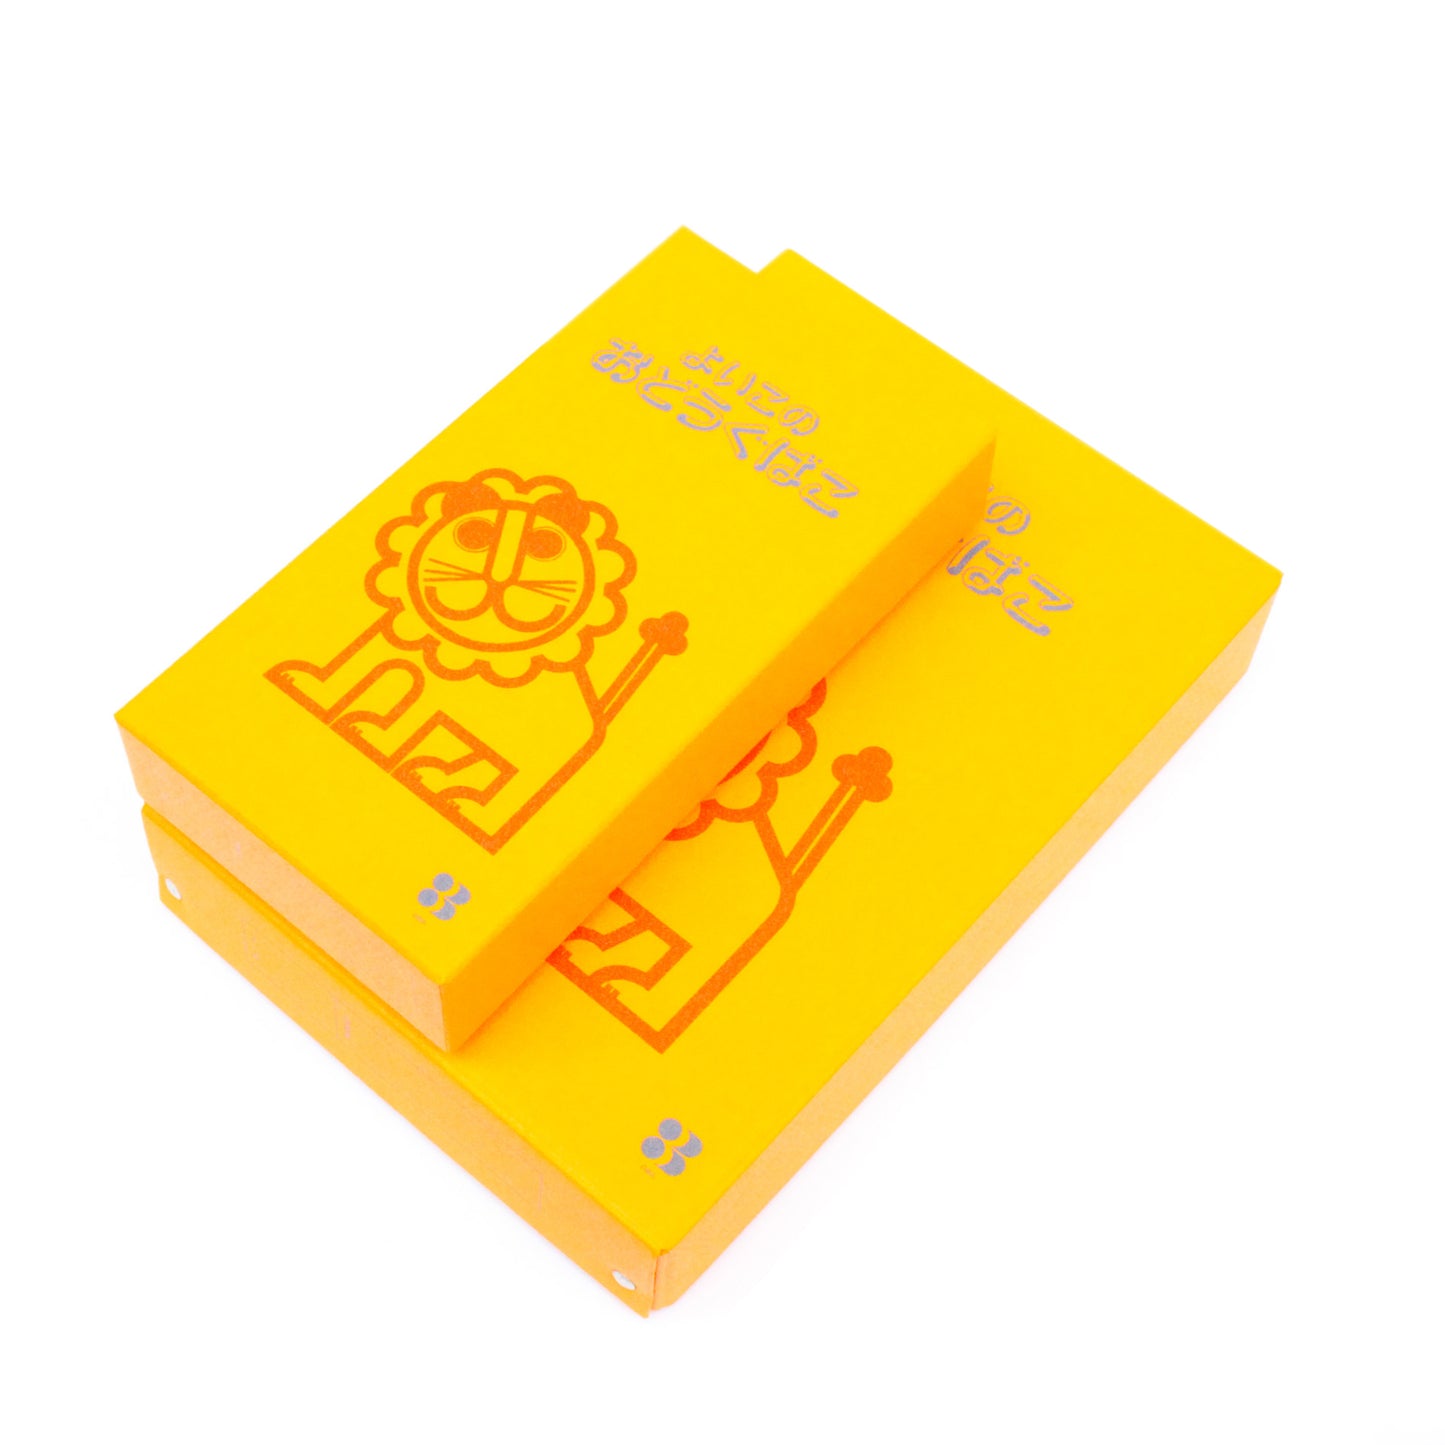 LION Tool Box for "Good Kids" - Small